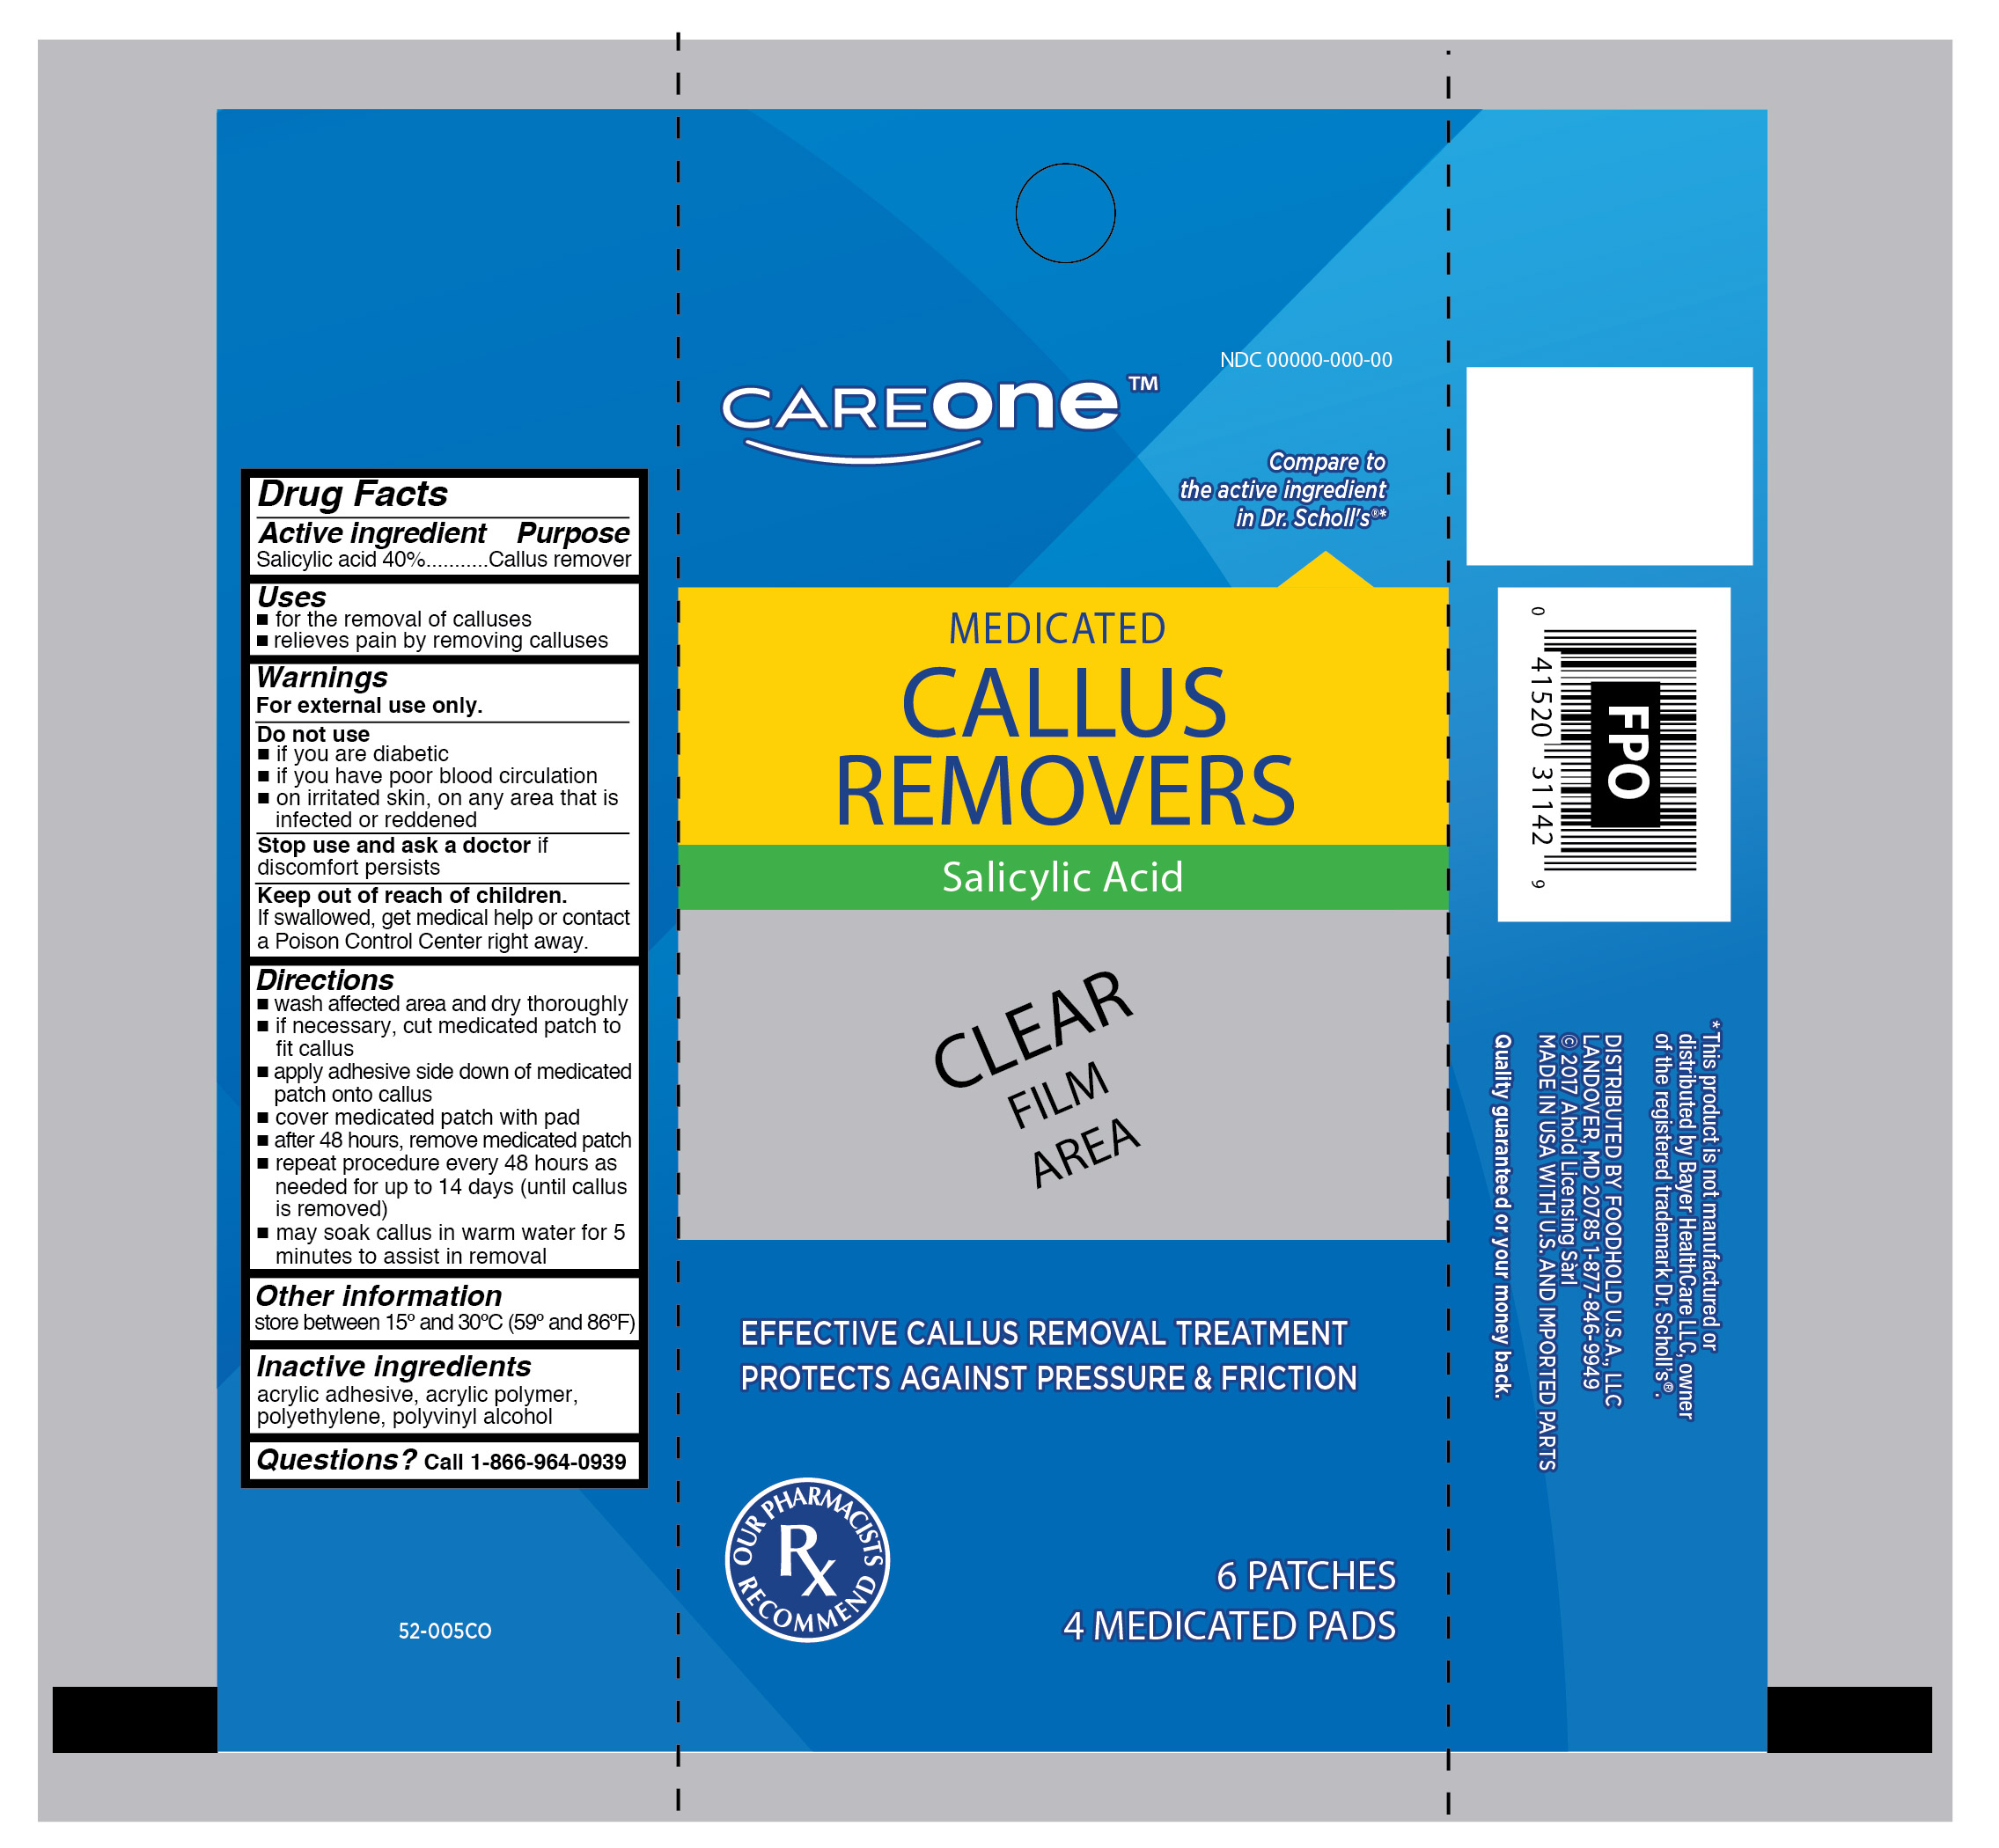 CareONe_Callus Removers 6 CT FILM_52-005CO-01.jpg